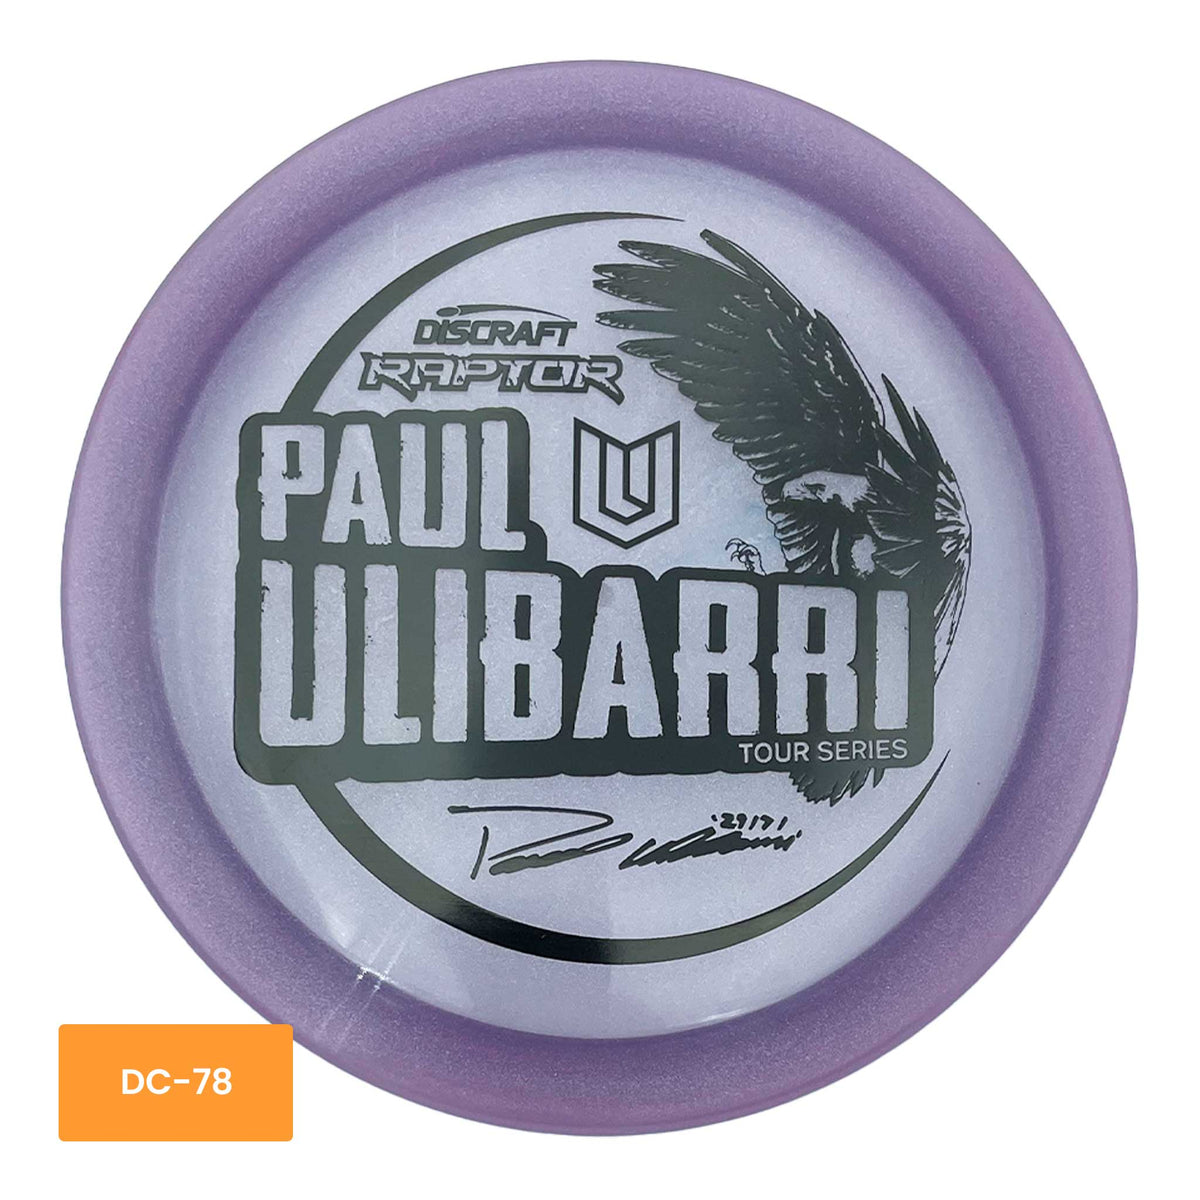 Discraft 2021 Paul Ulibarri Tour Series Raptor distance driver